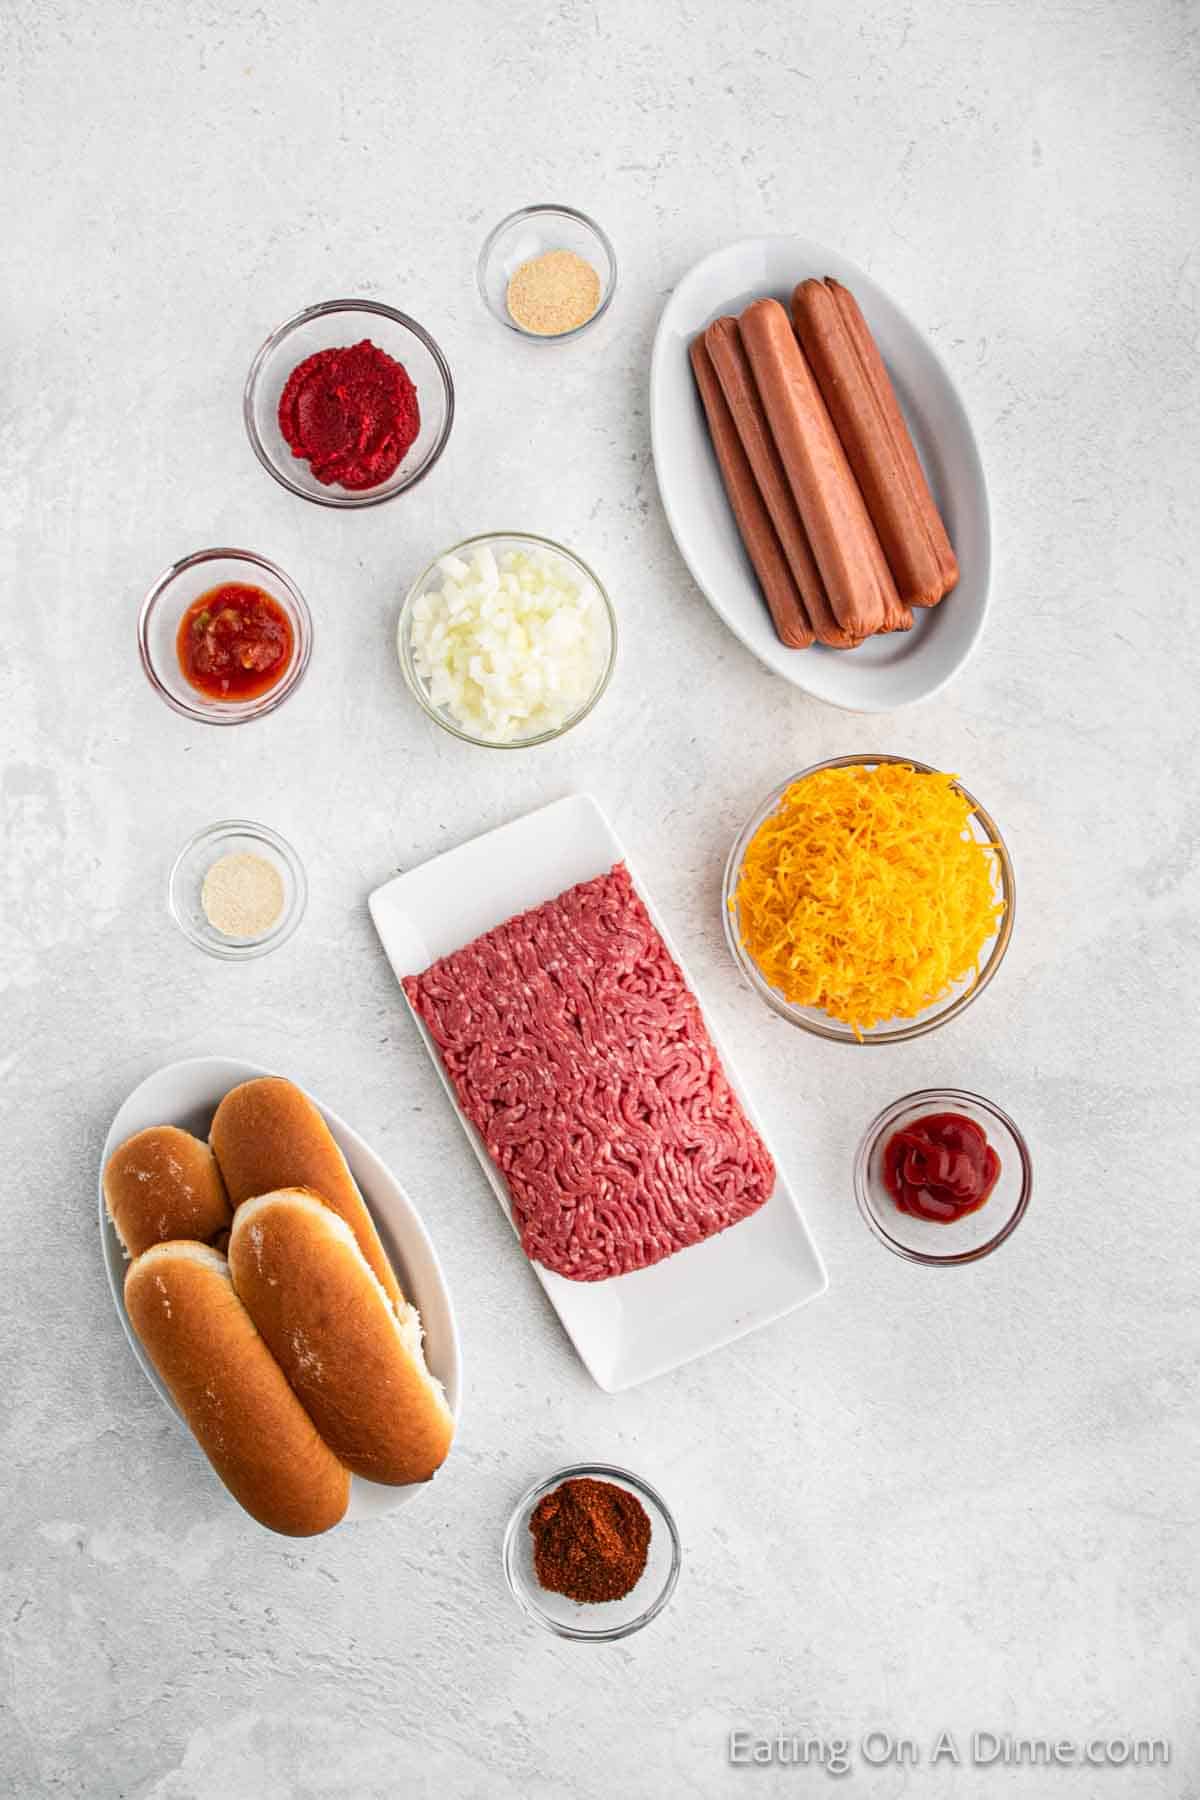 Hot dog chili ingredients - ground beef, ketchup, hot dogs, salsa, onion powder, tomato paste, garlic powder, chili powder, hot dog buns, diced onions, cheese, mustard